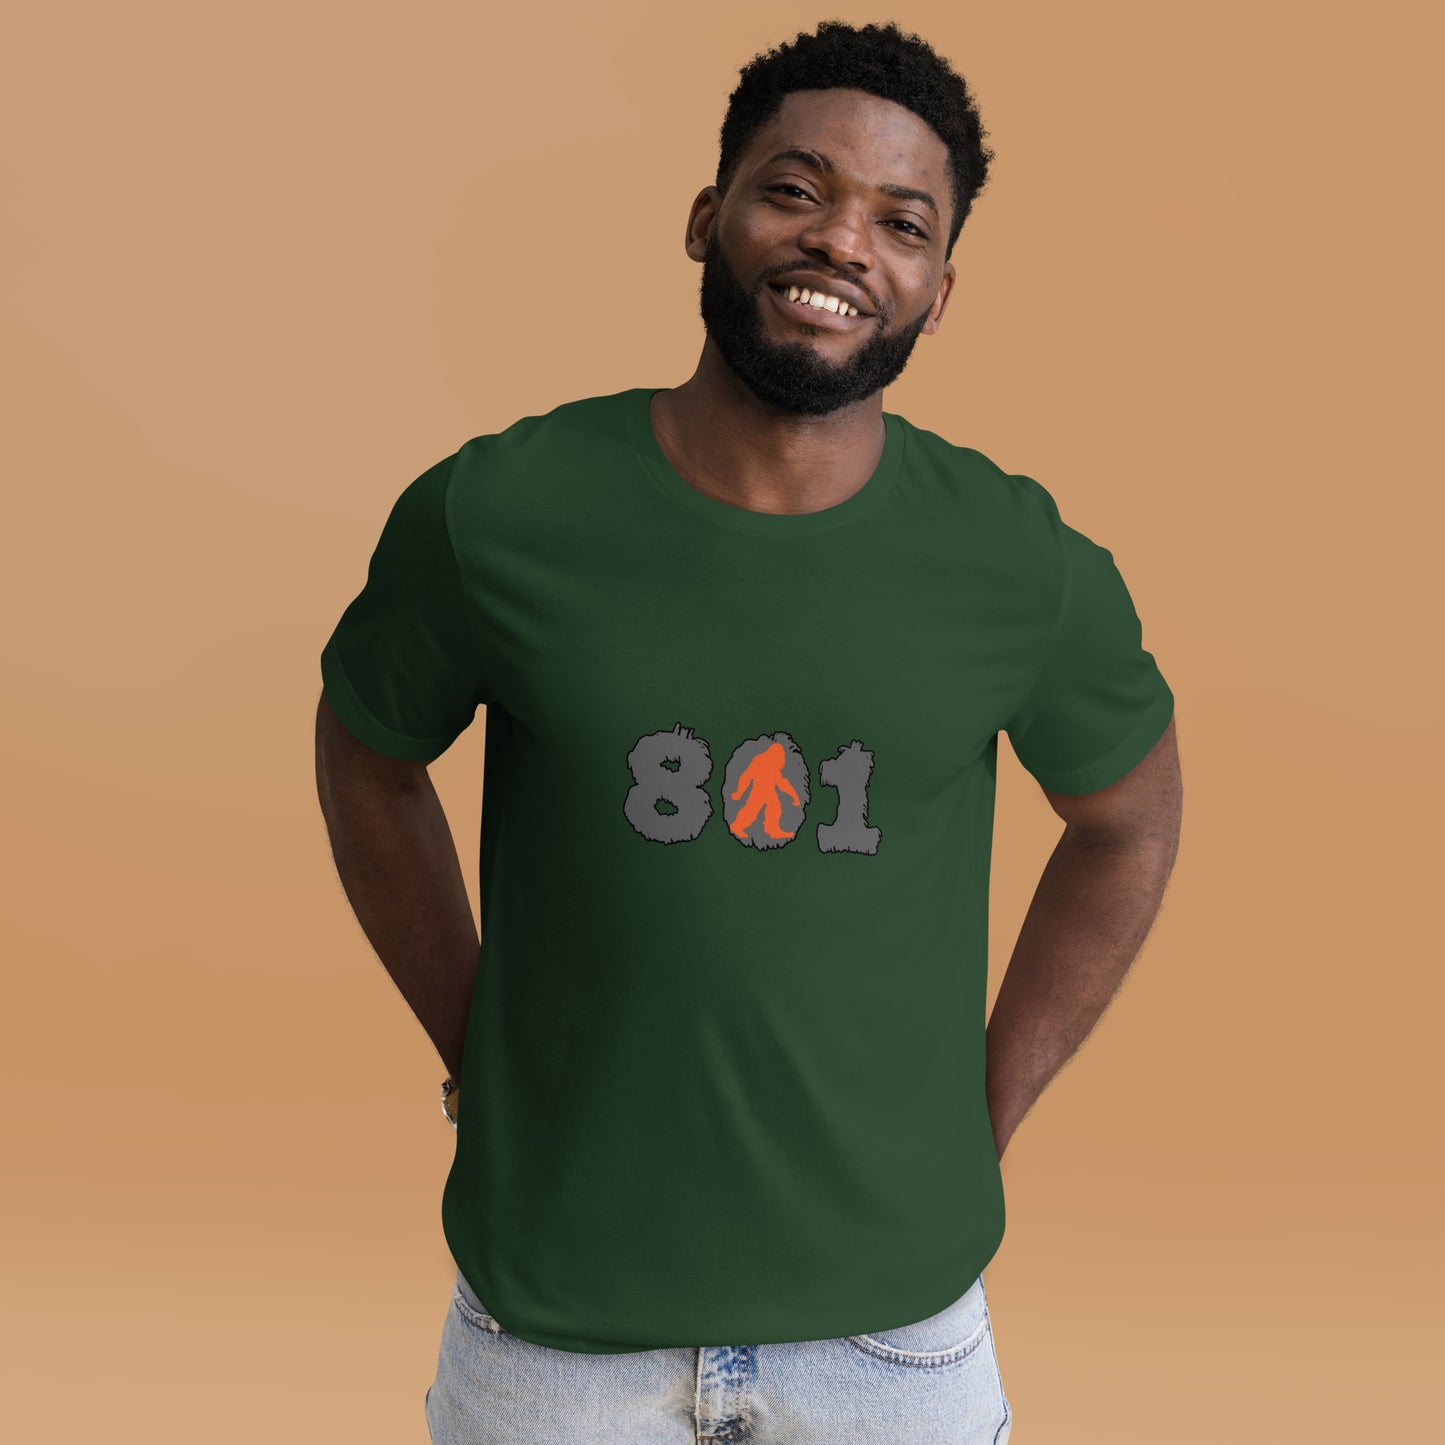 801 Unisex t-shirt